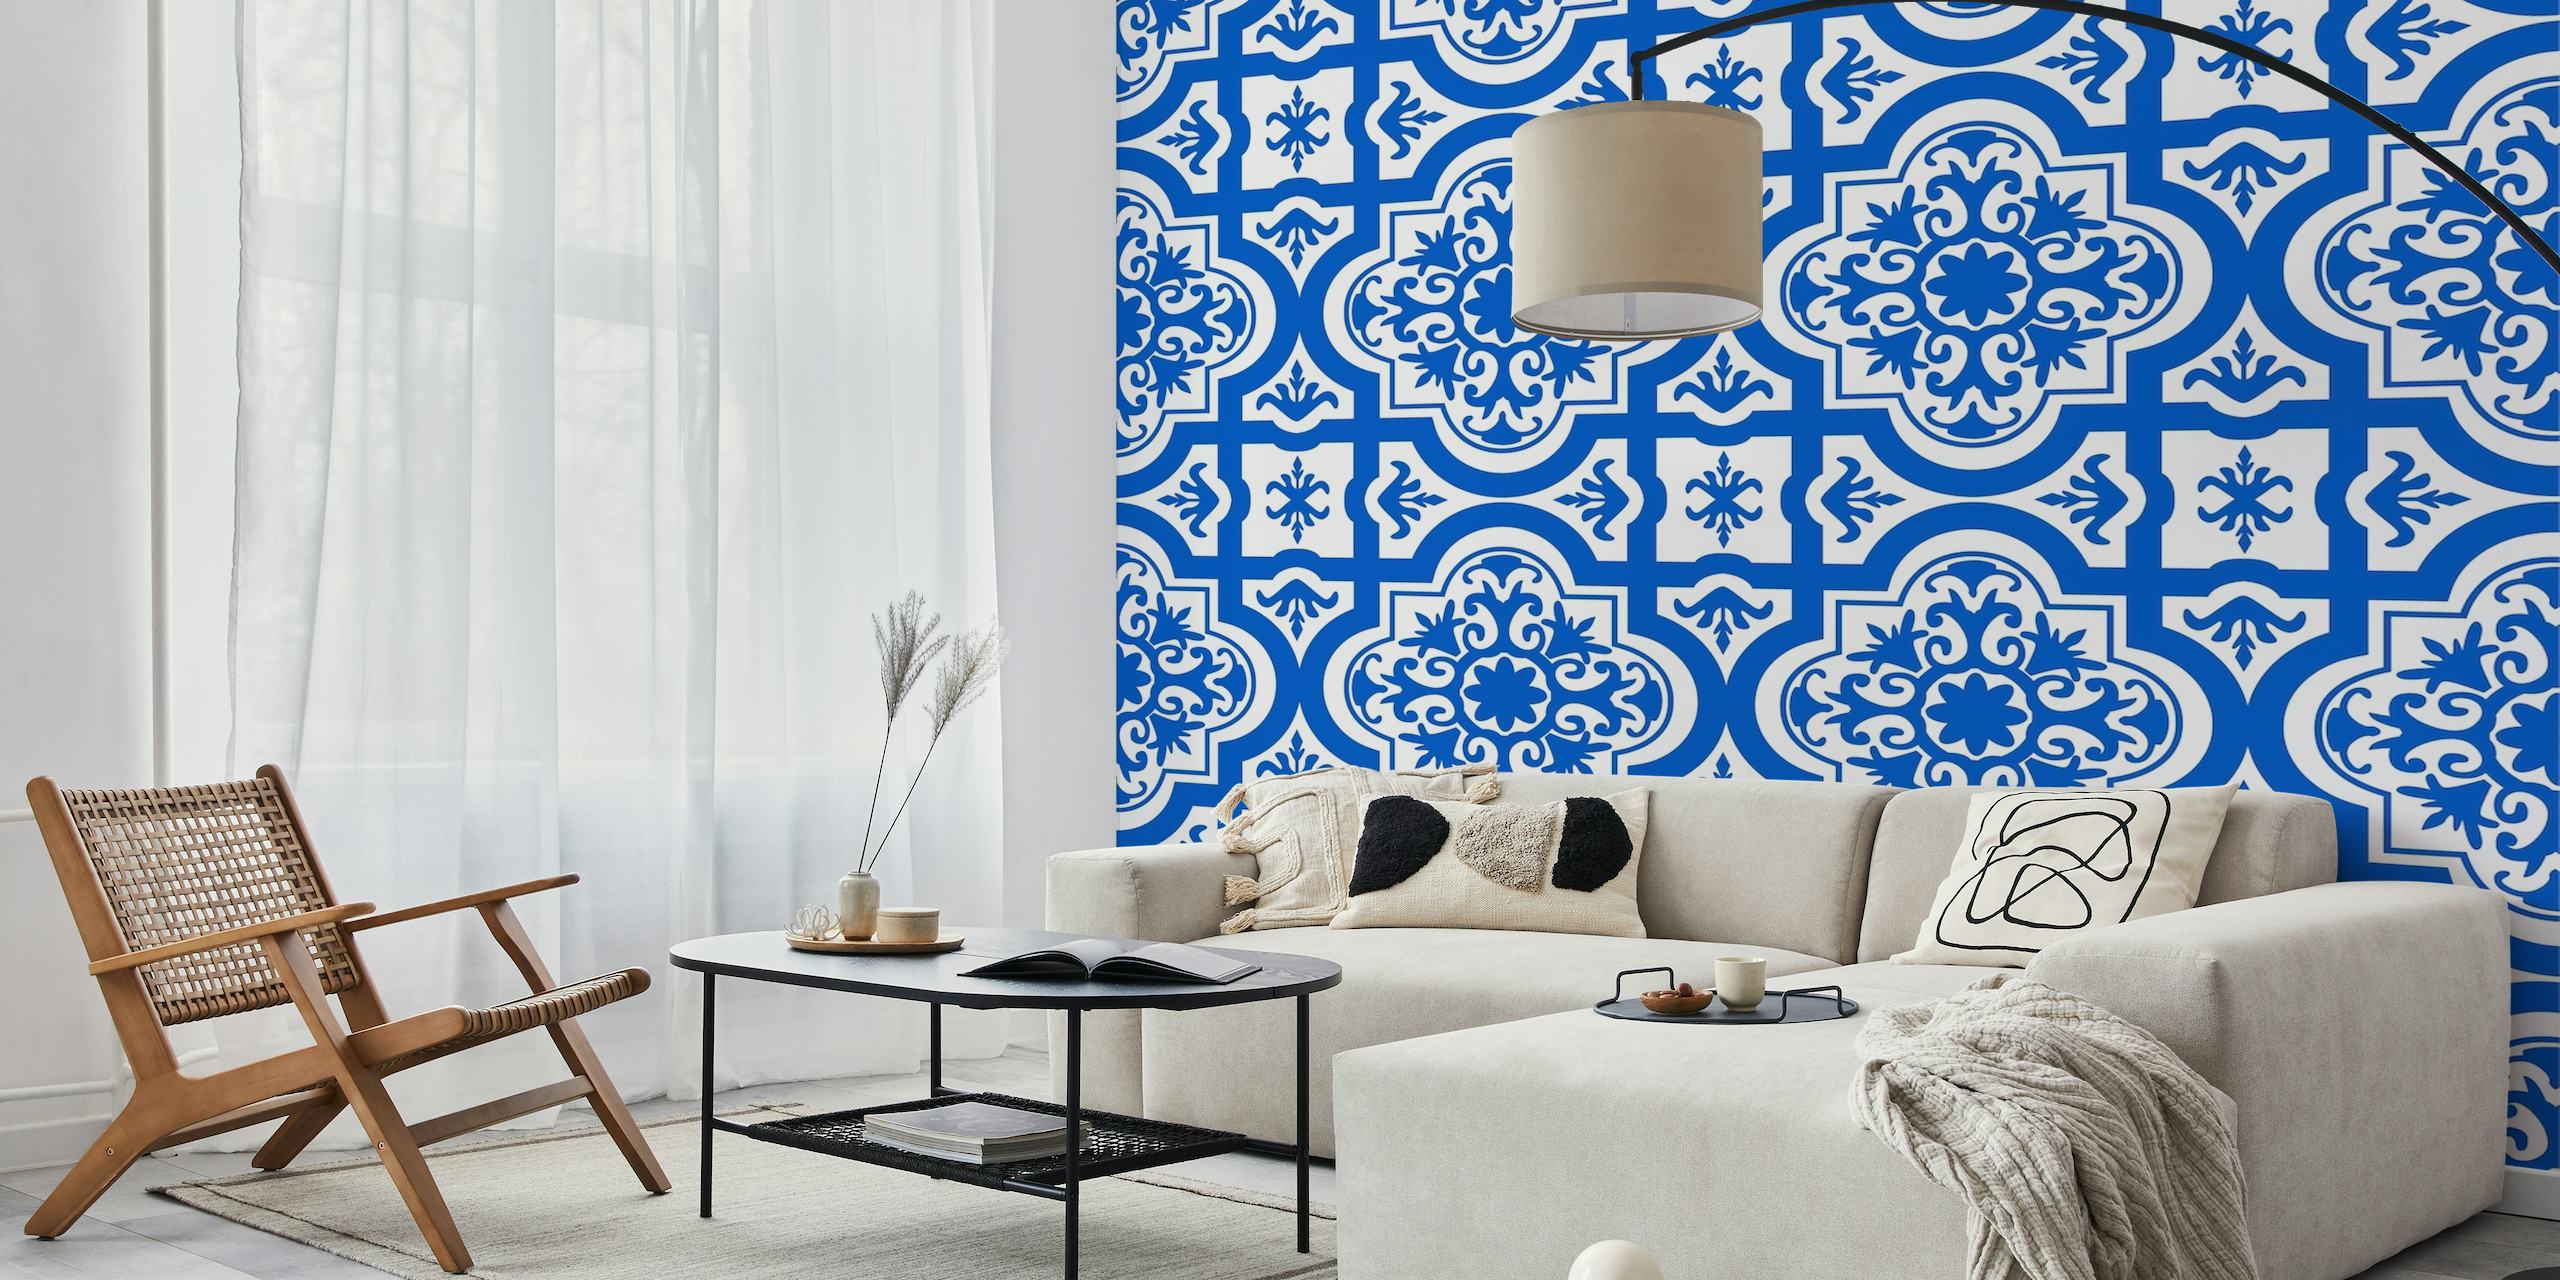 Spanish tile pattern azure blue white papiers peint